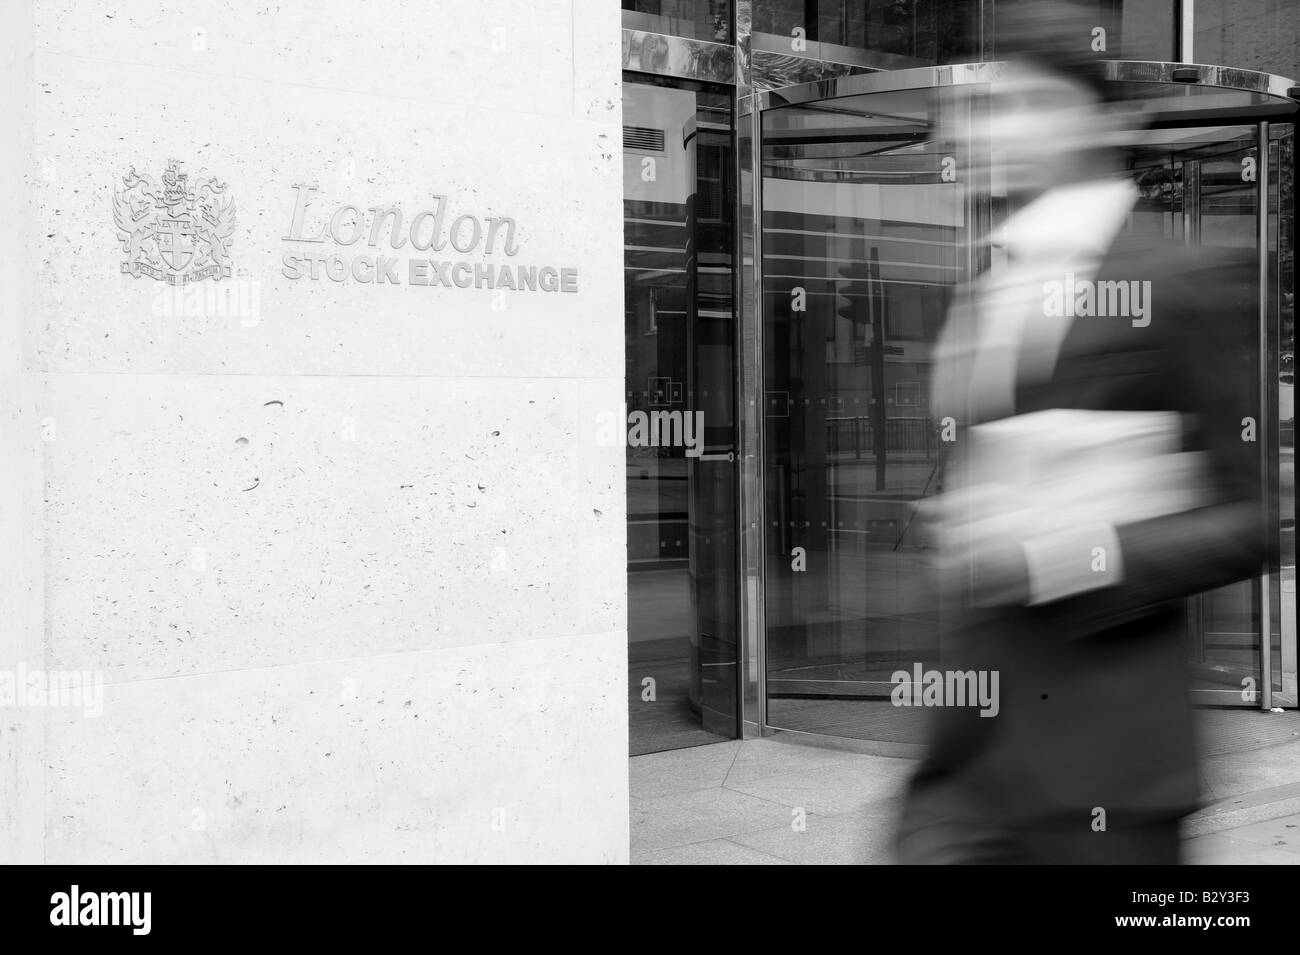 Business man walks past the London stock exchange Stock Photo